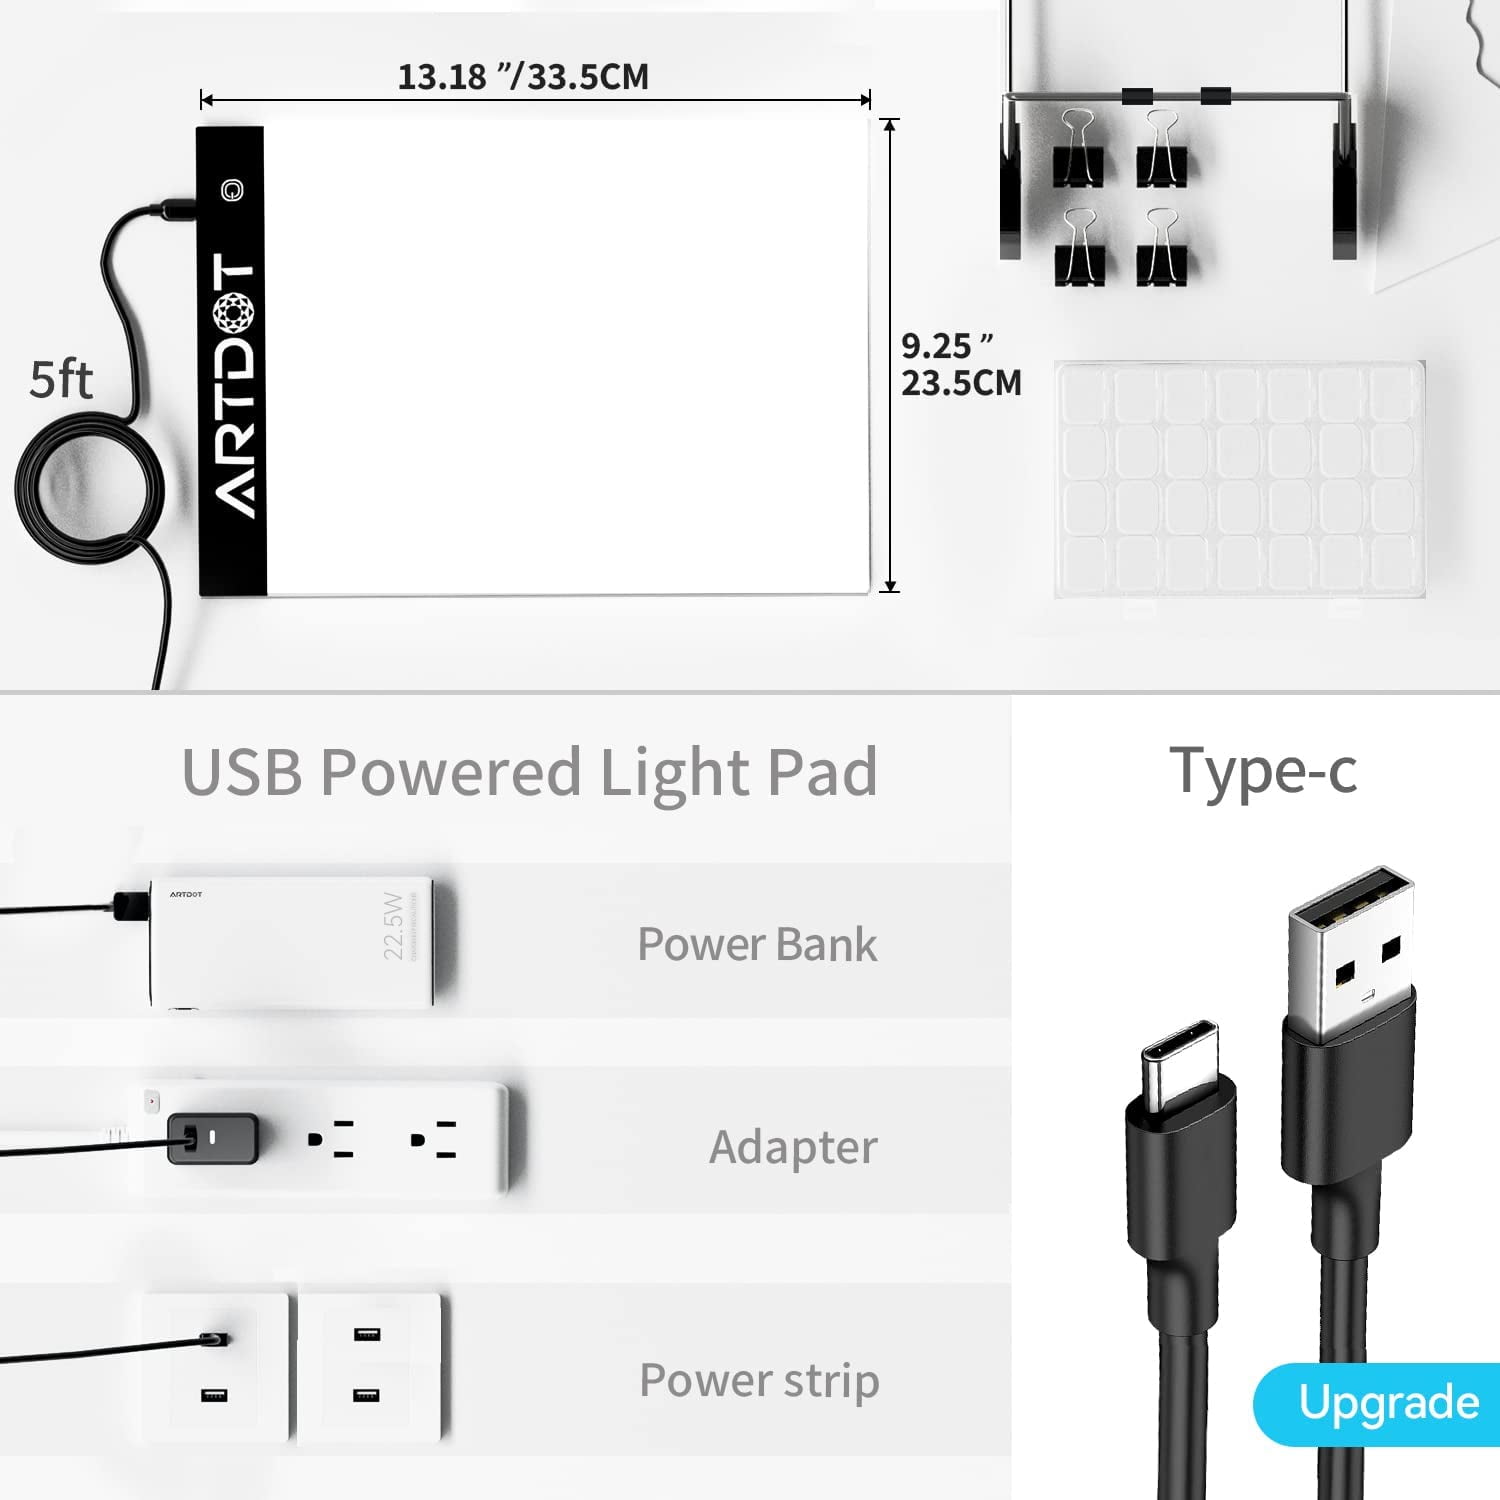 ARTDOT A4 LED Light Board for Diamond Painting kits, USB Powered